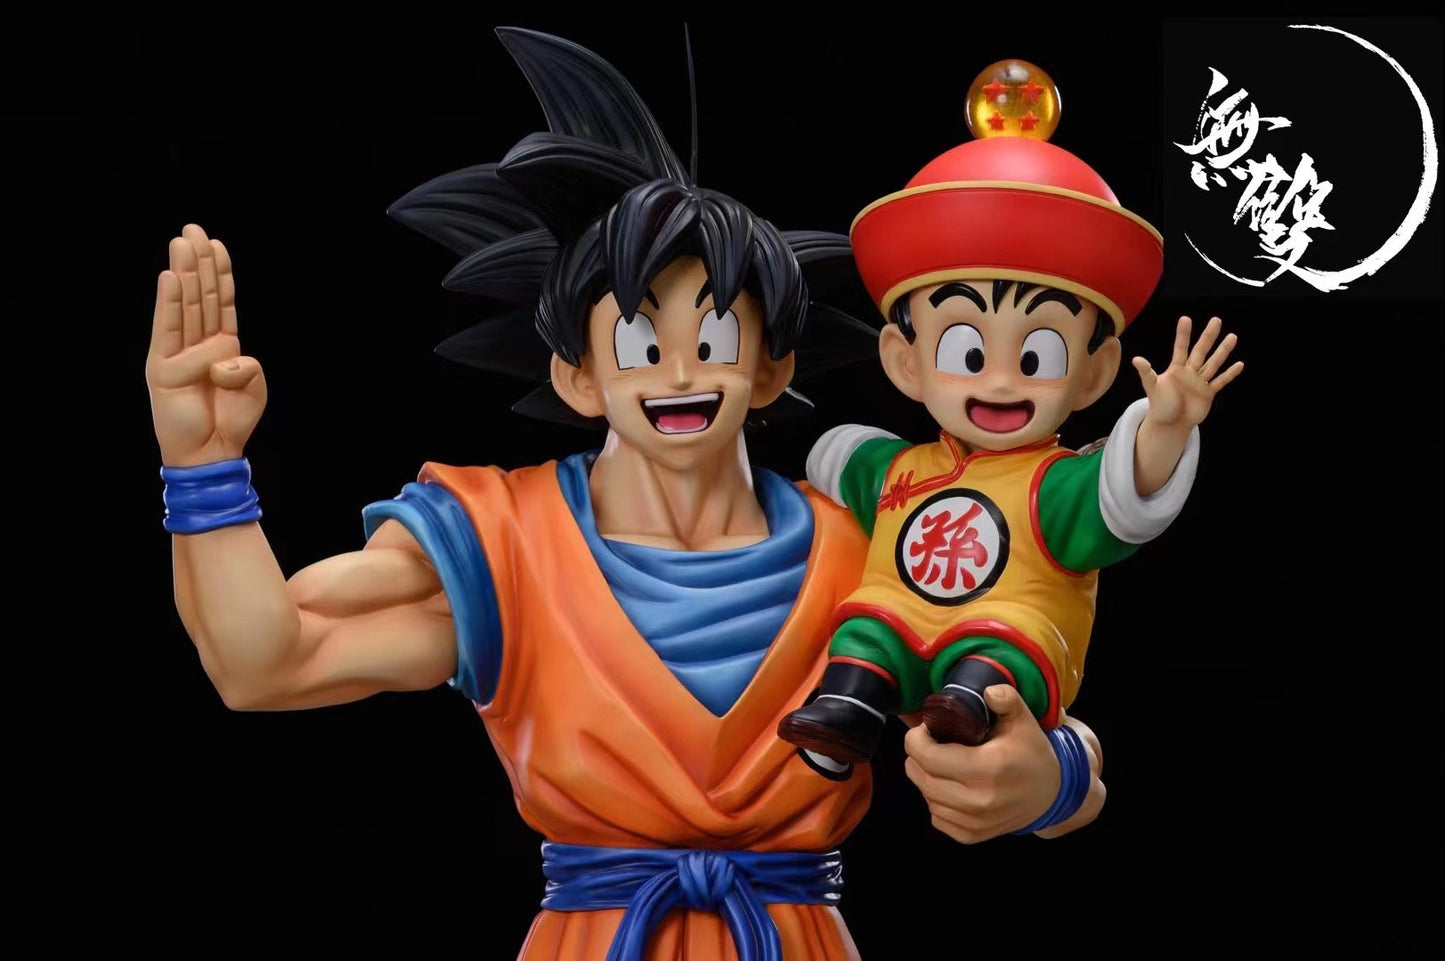 WS - Goku and Gohan StatueCorp